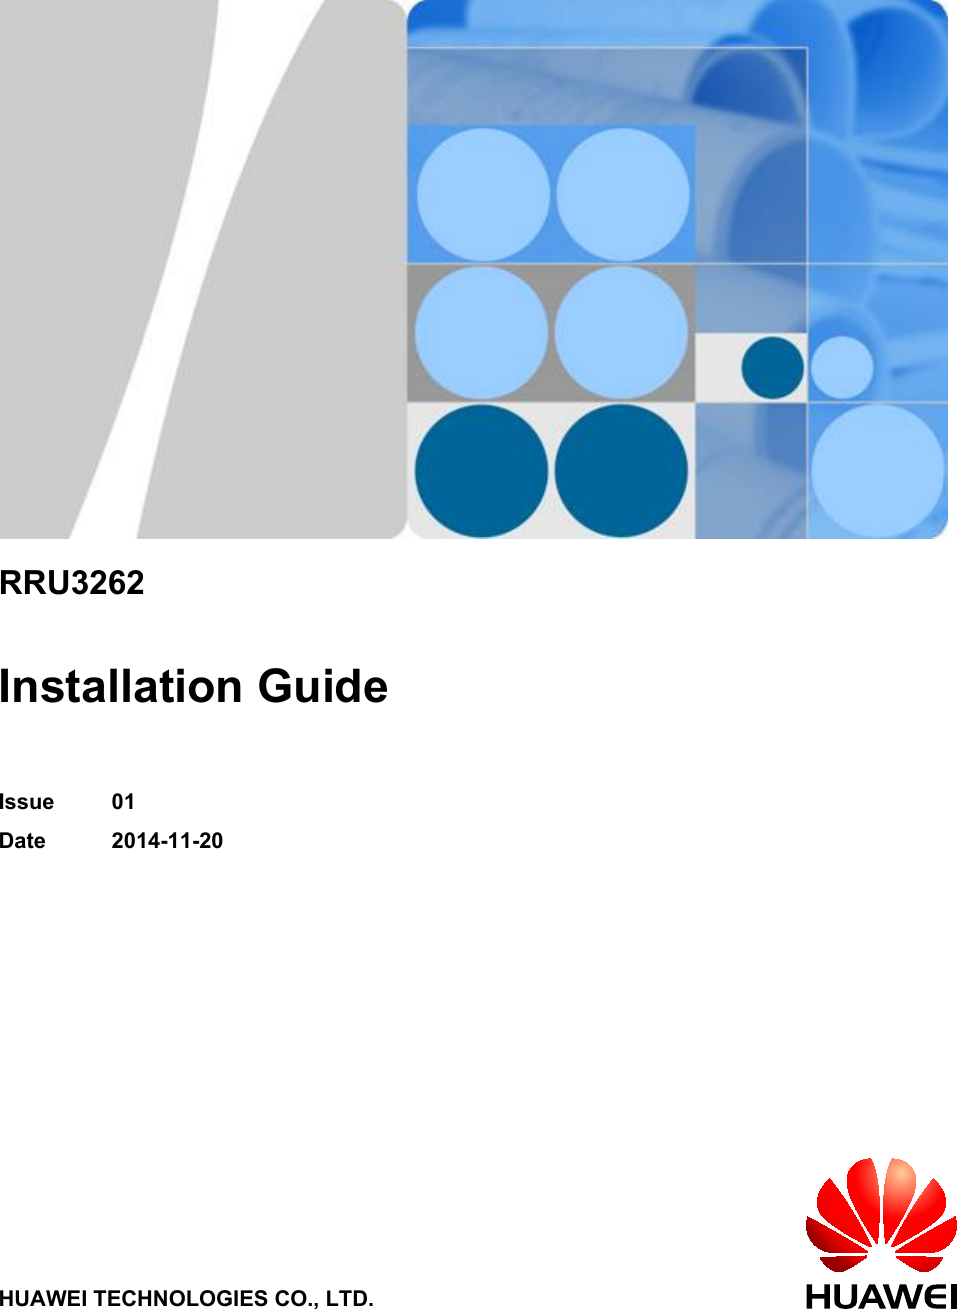 RRU3262Installation GuideIssue 01Date 2014-11-20HUAWEI TECHNOLOGIES CO., LTD.